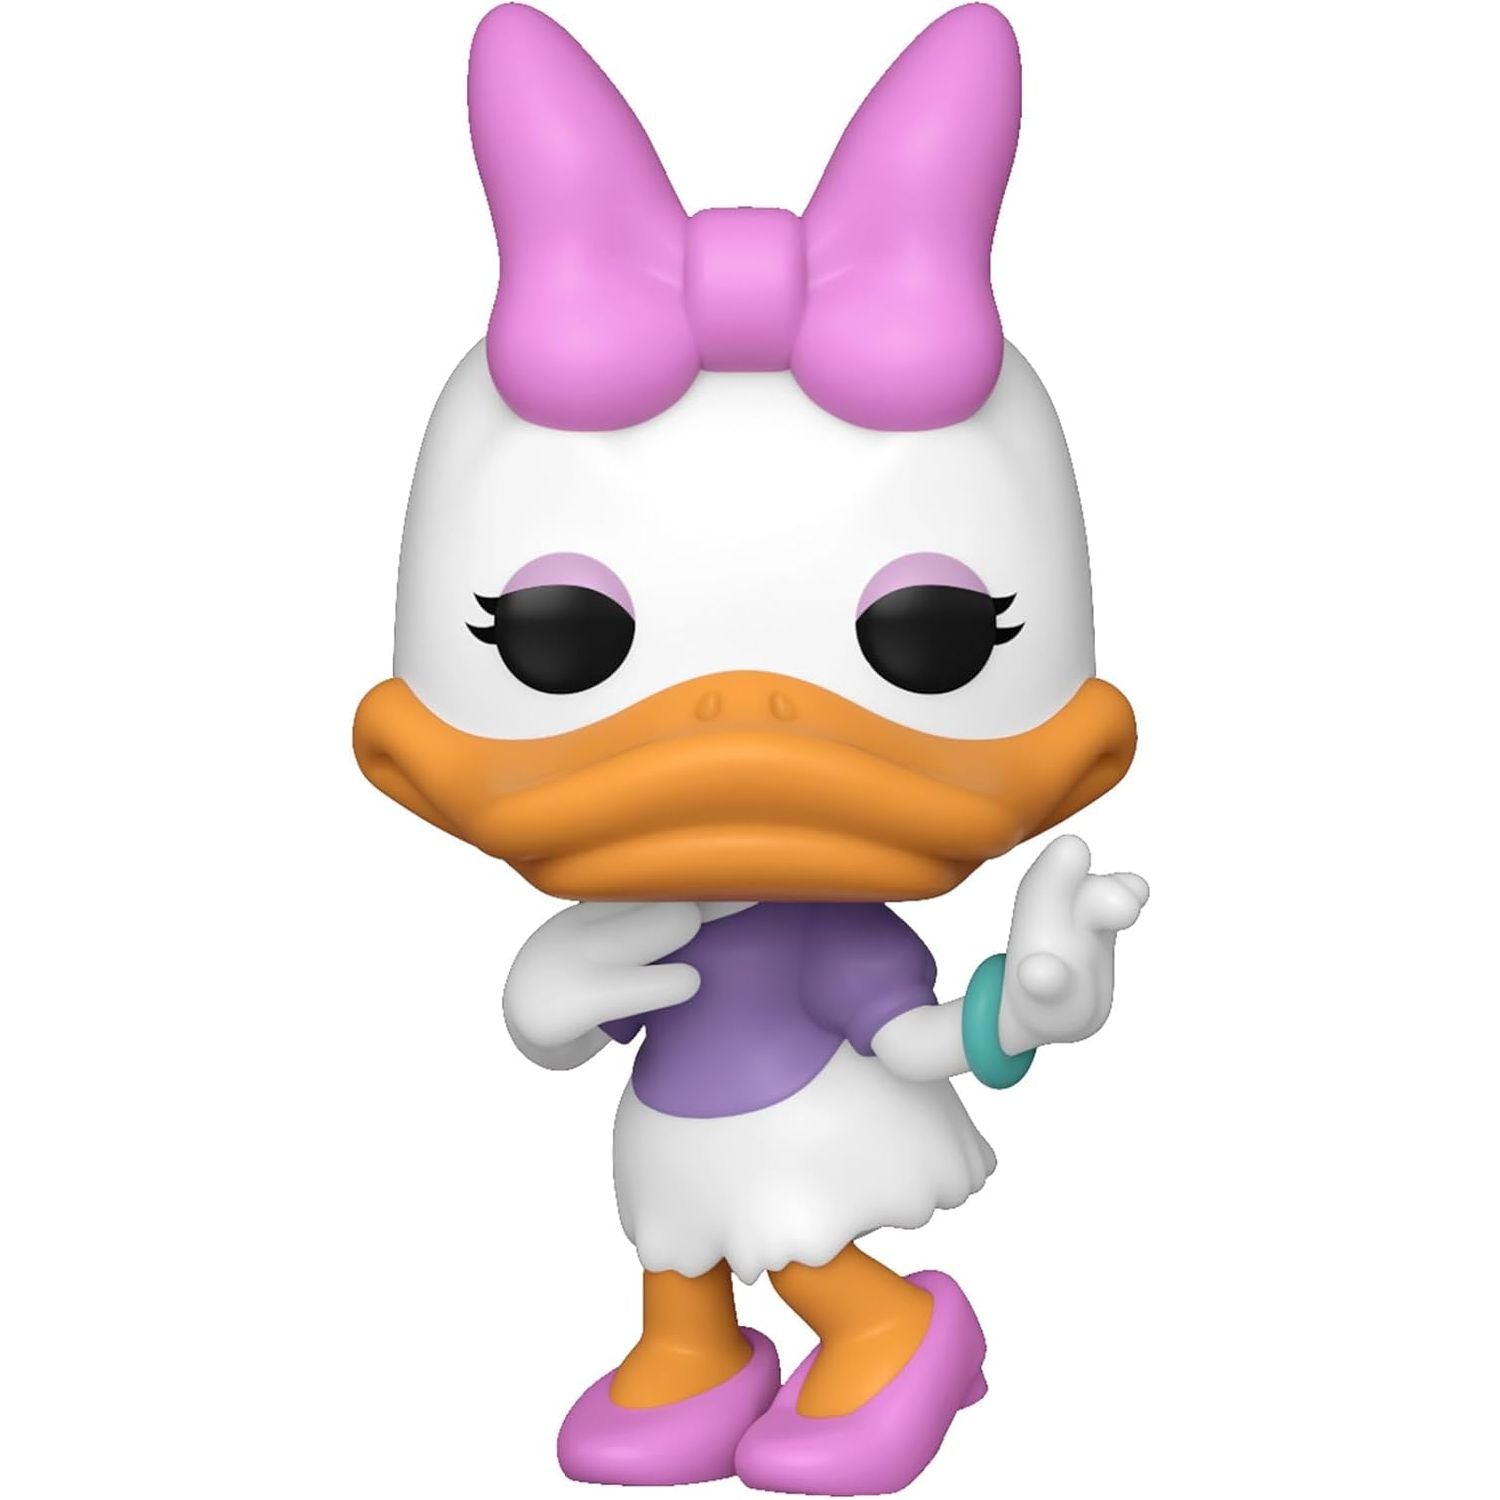 Funko Pop! Disney Classics Mickey and Friends - Daisy Duck